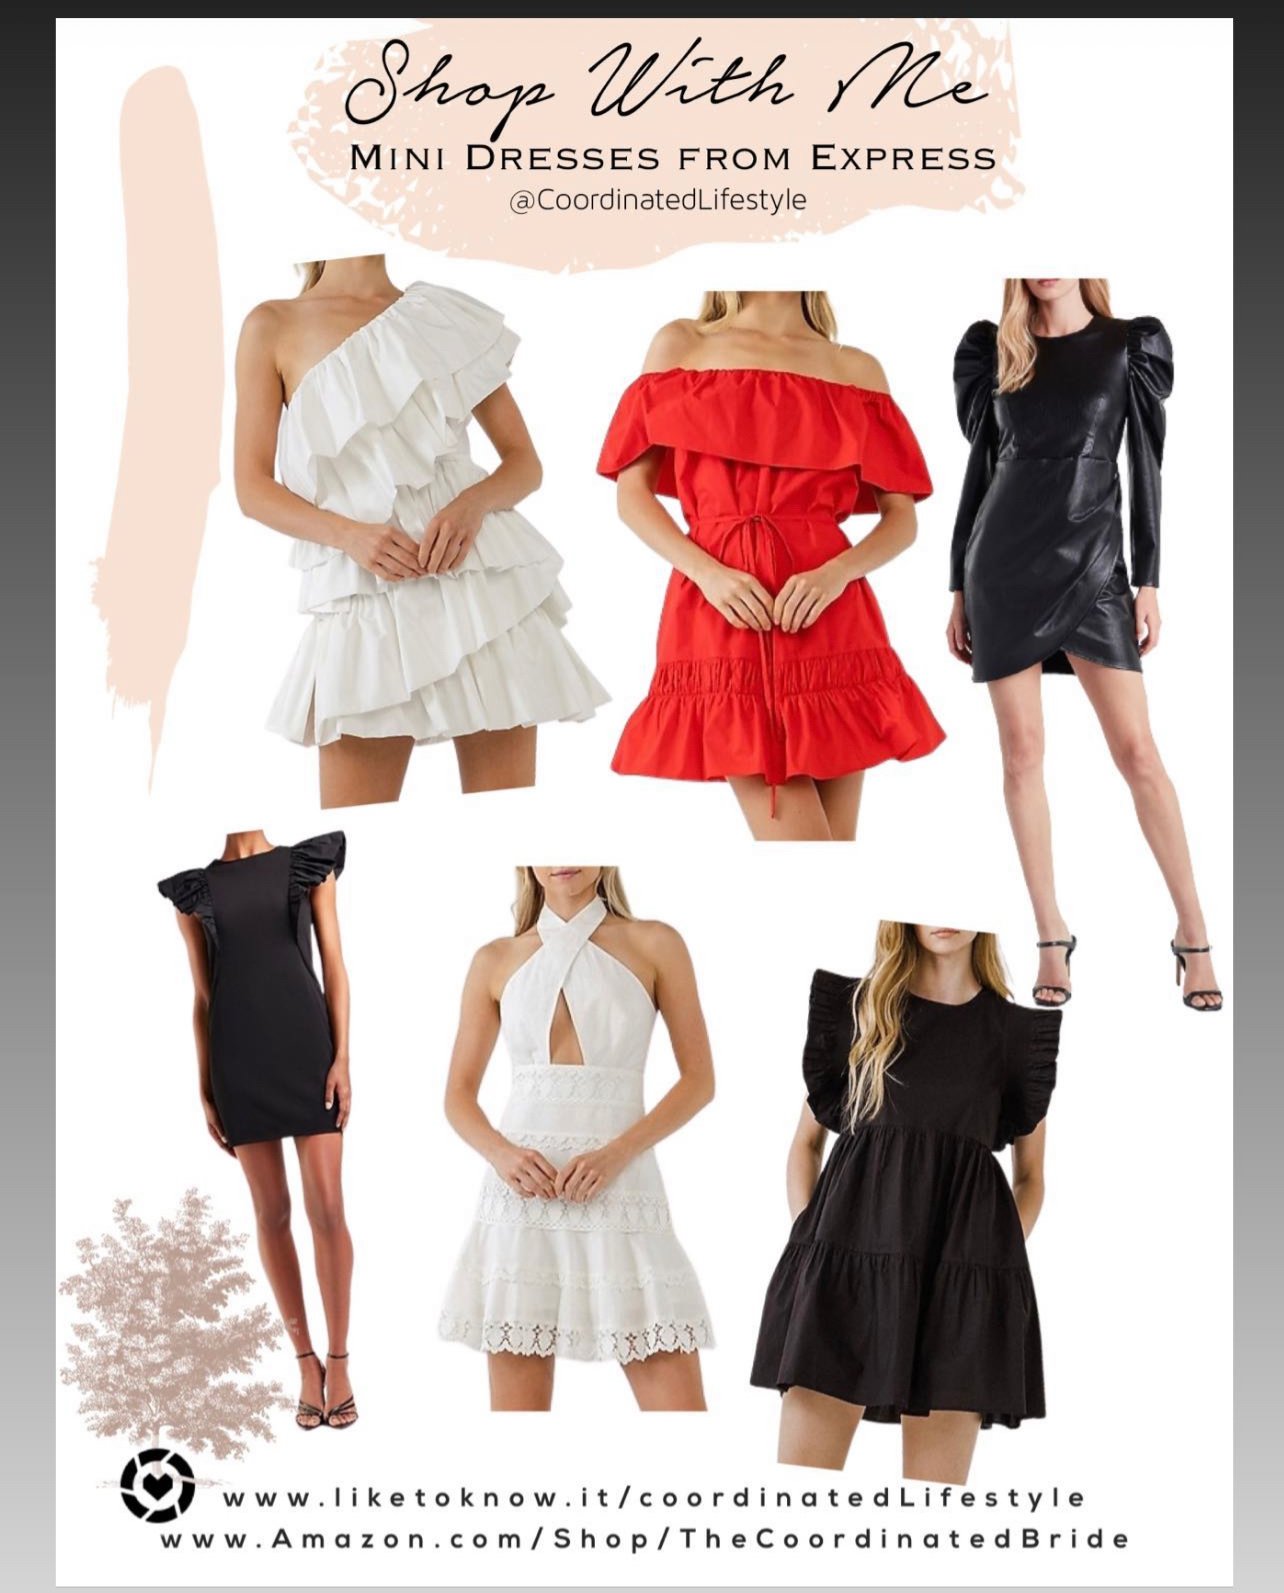 Mini Dresses from Express